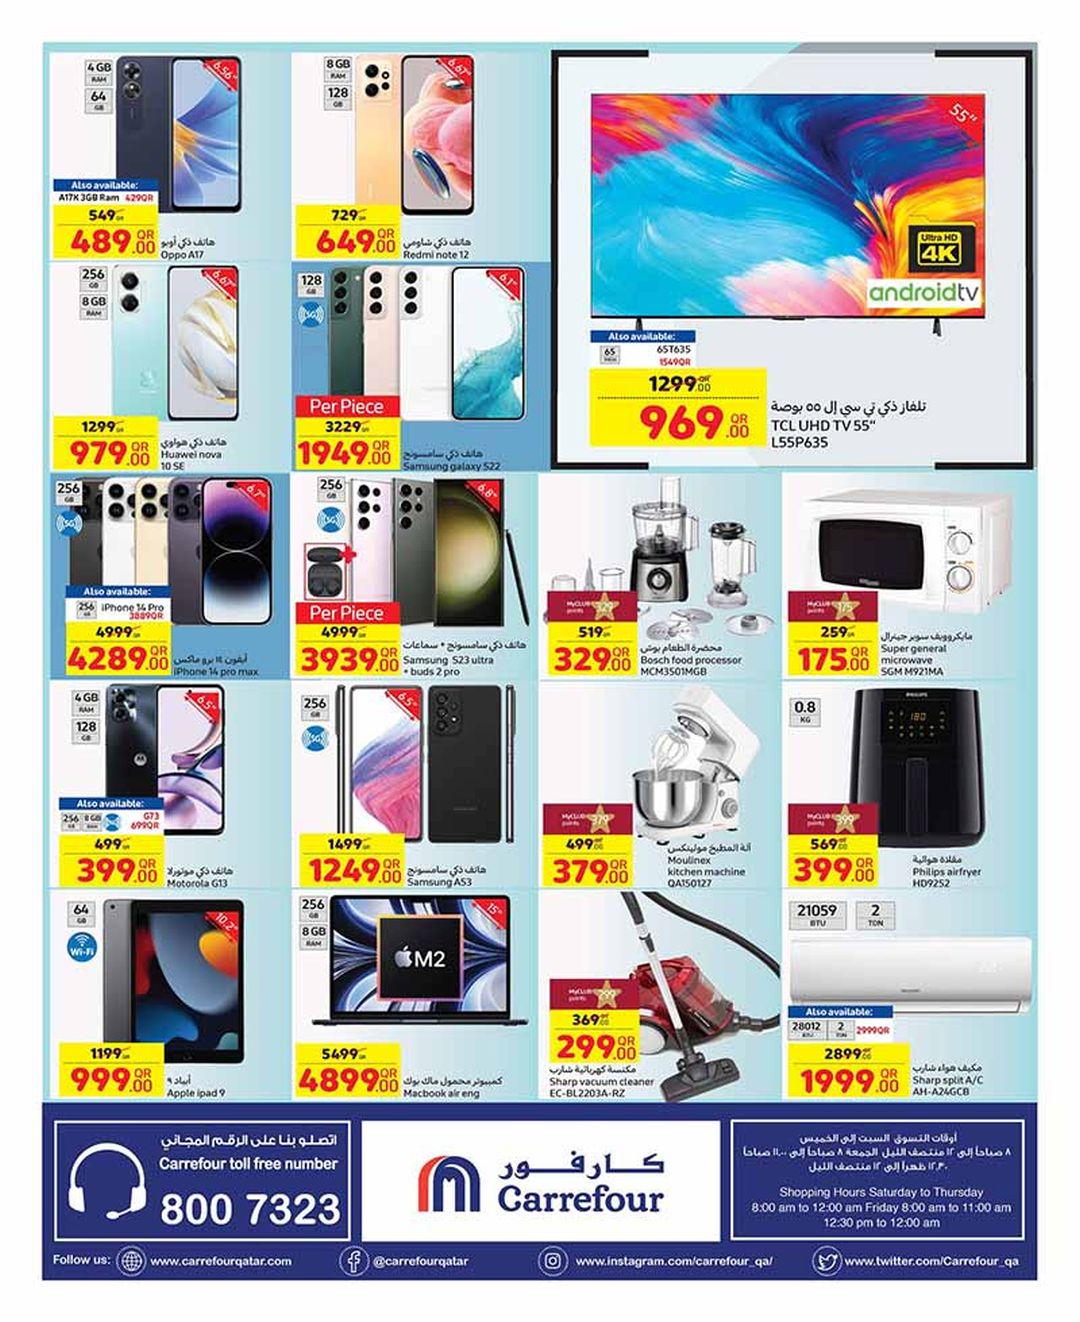 smartphones and gadget price in qatar